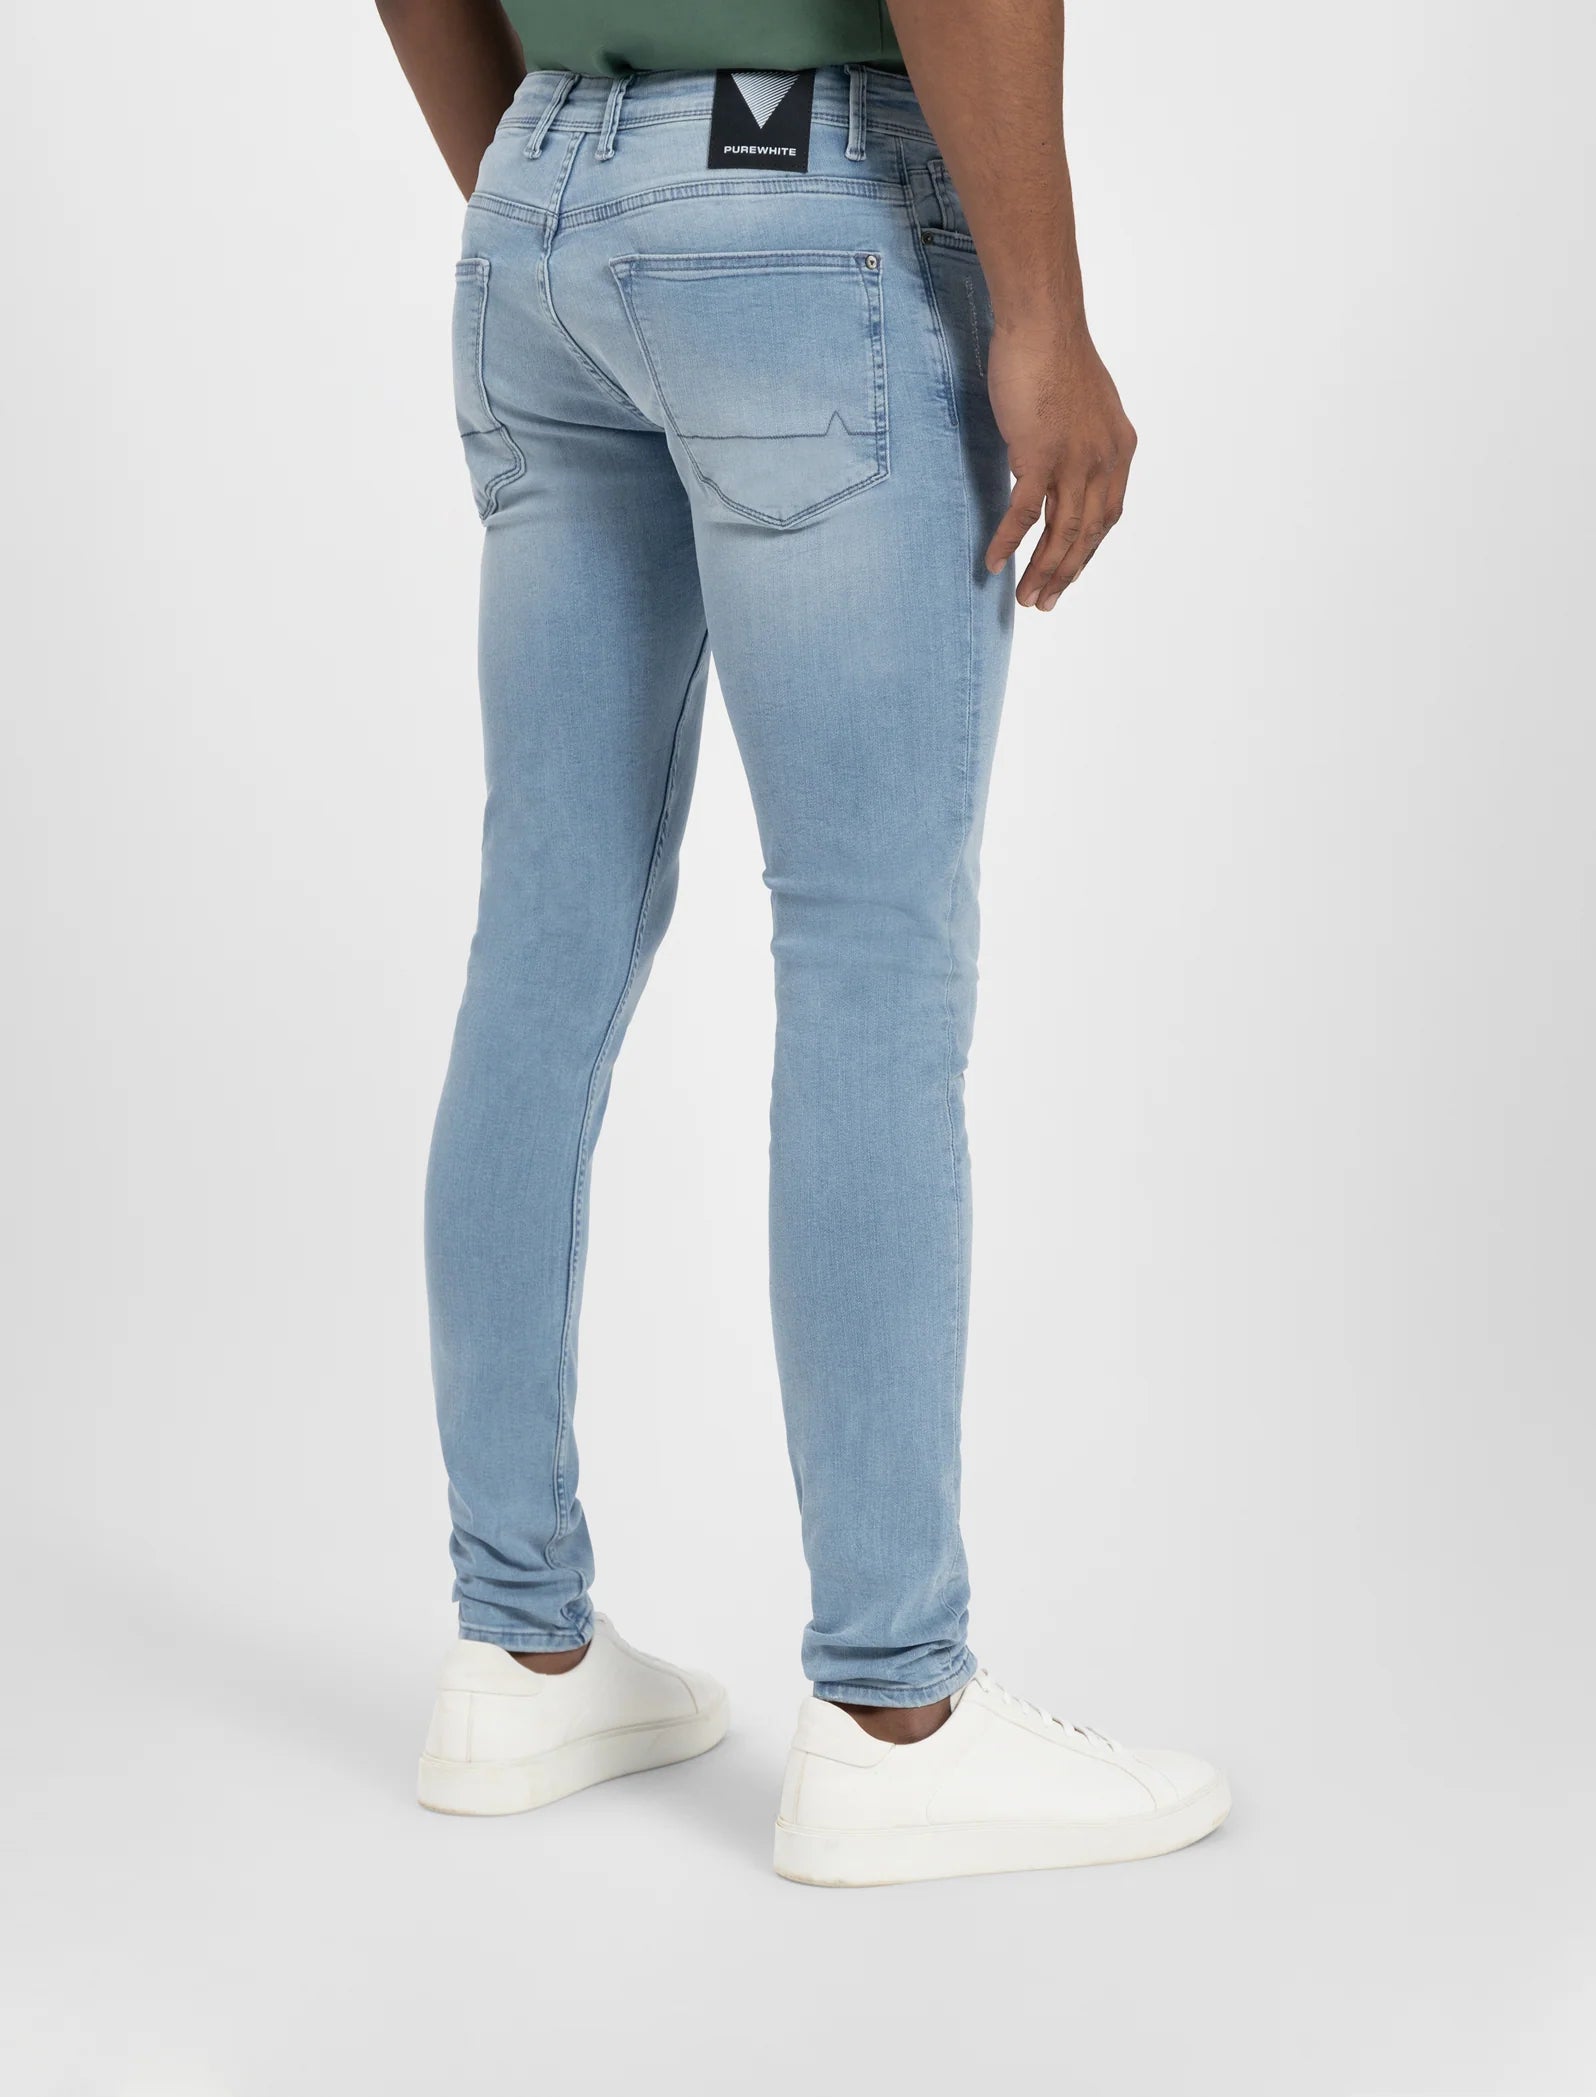 Purewhite Jeans The Jone W1043